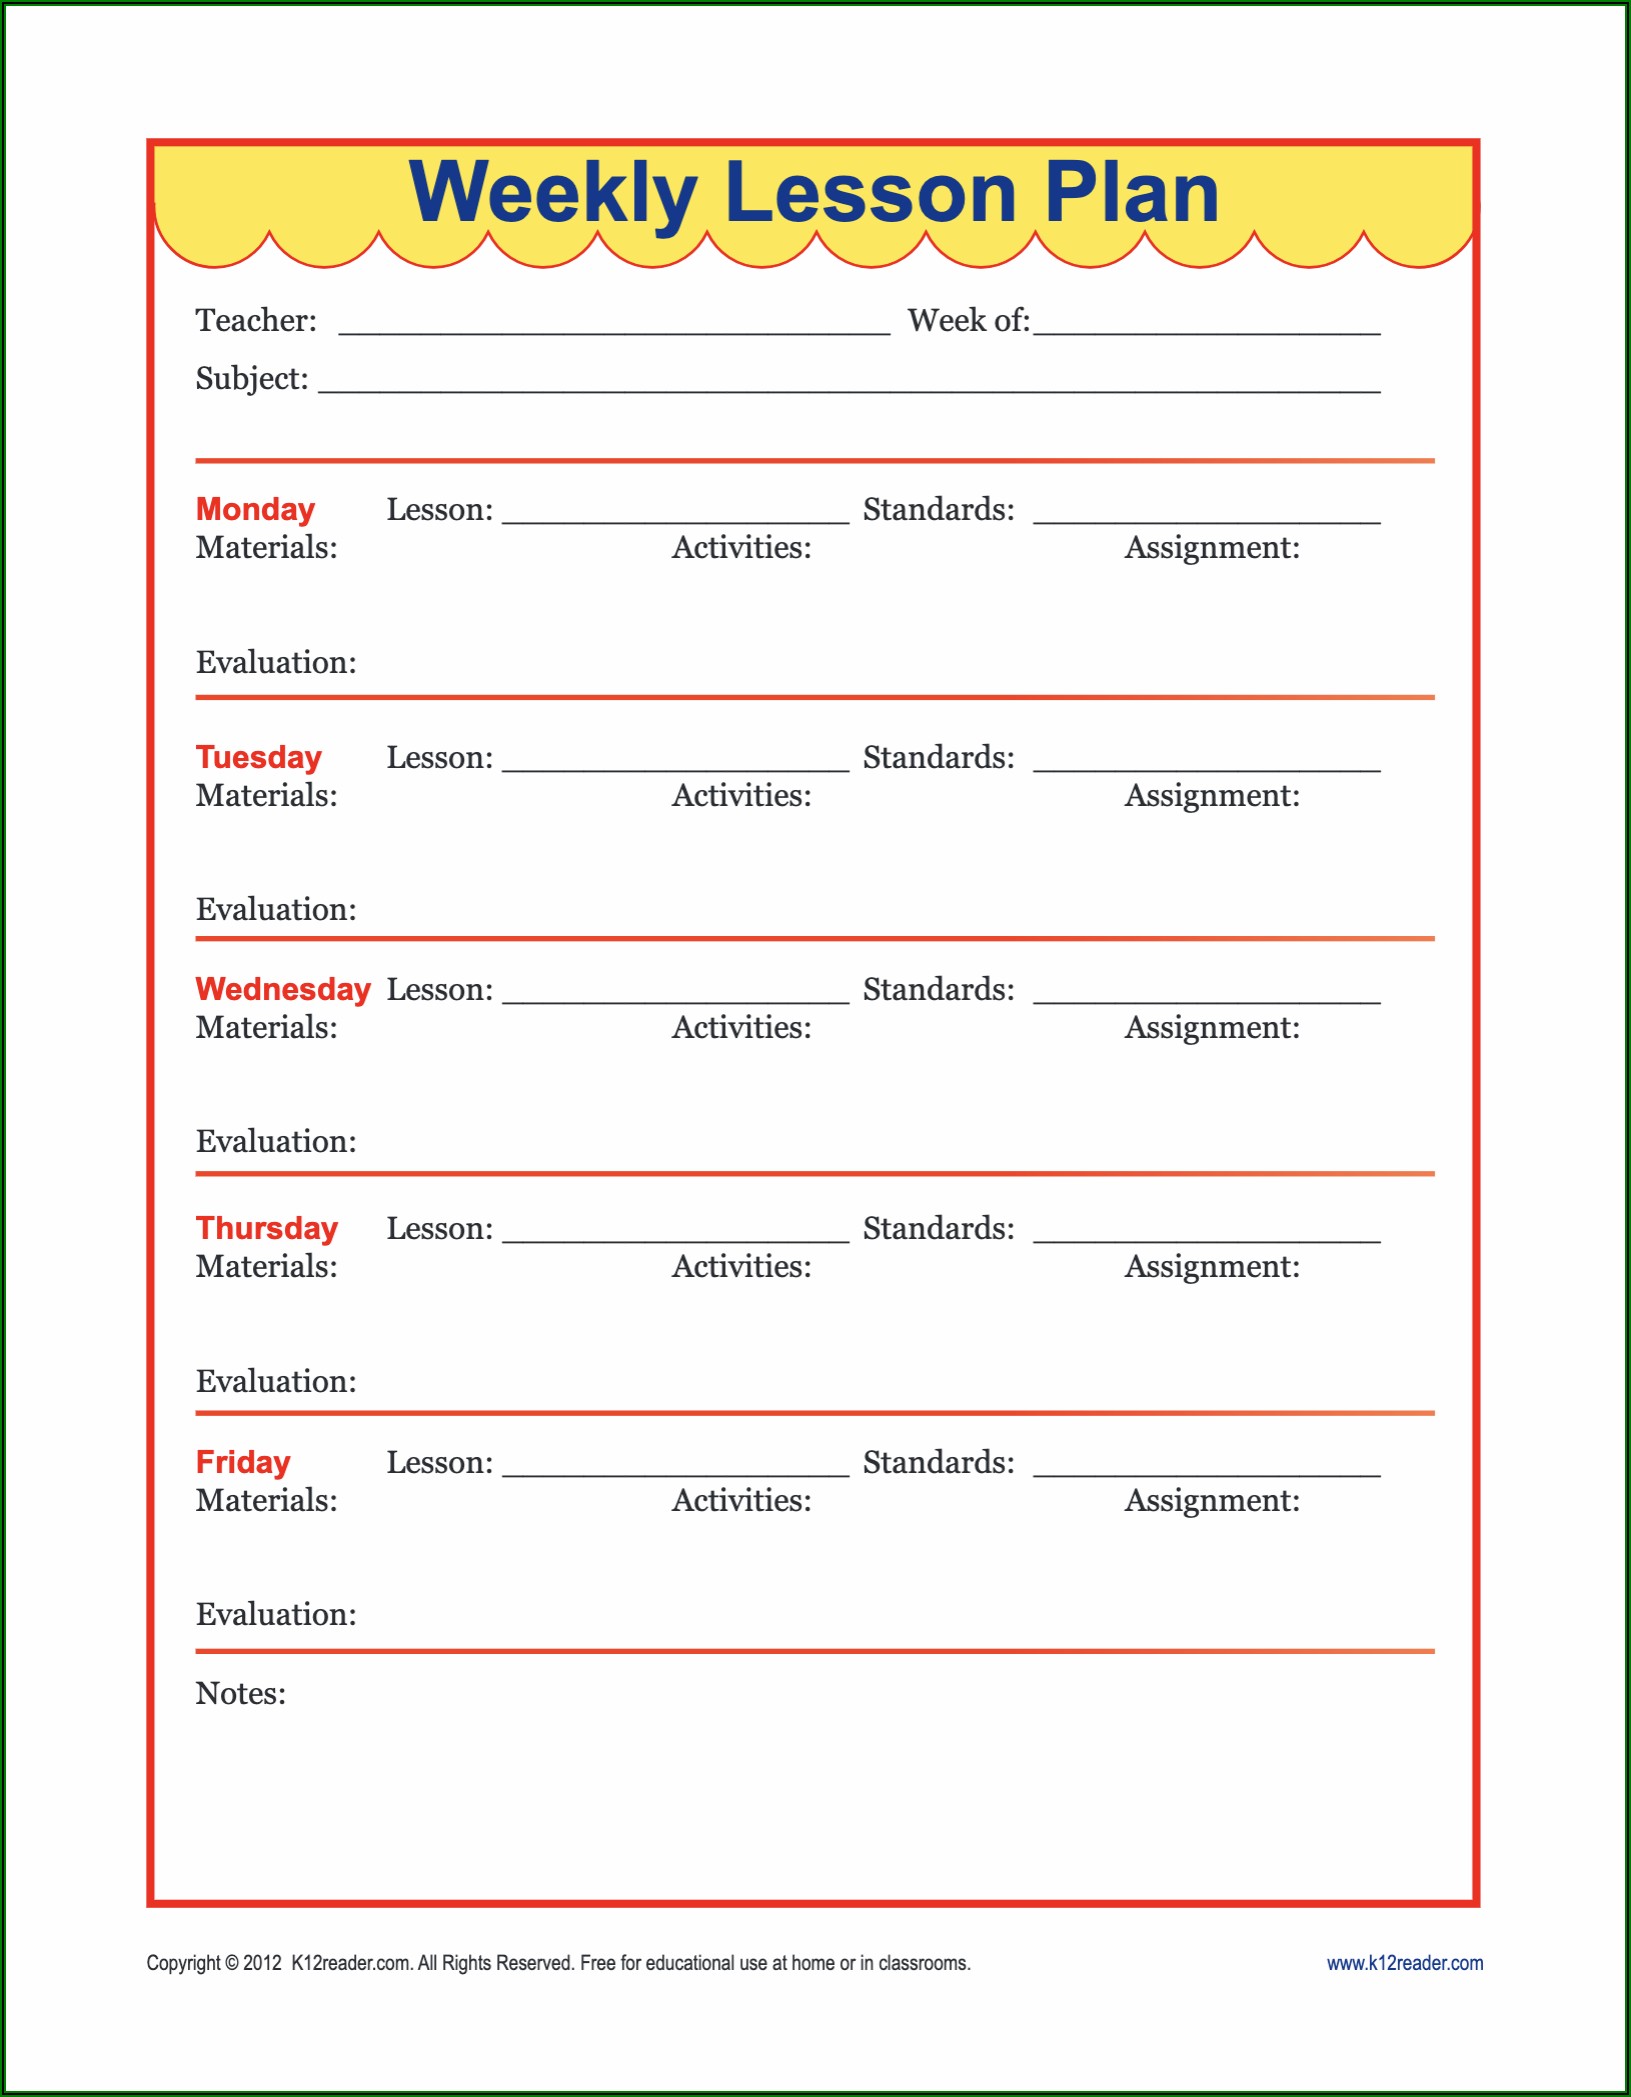 Teaching Strategies Weekly Planning Form Template